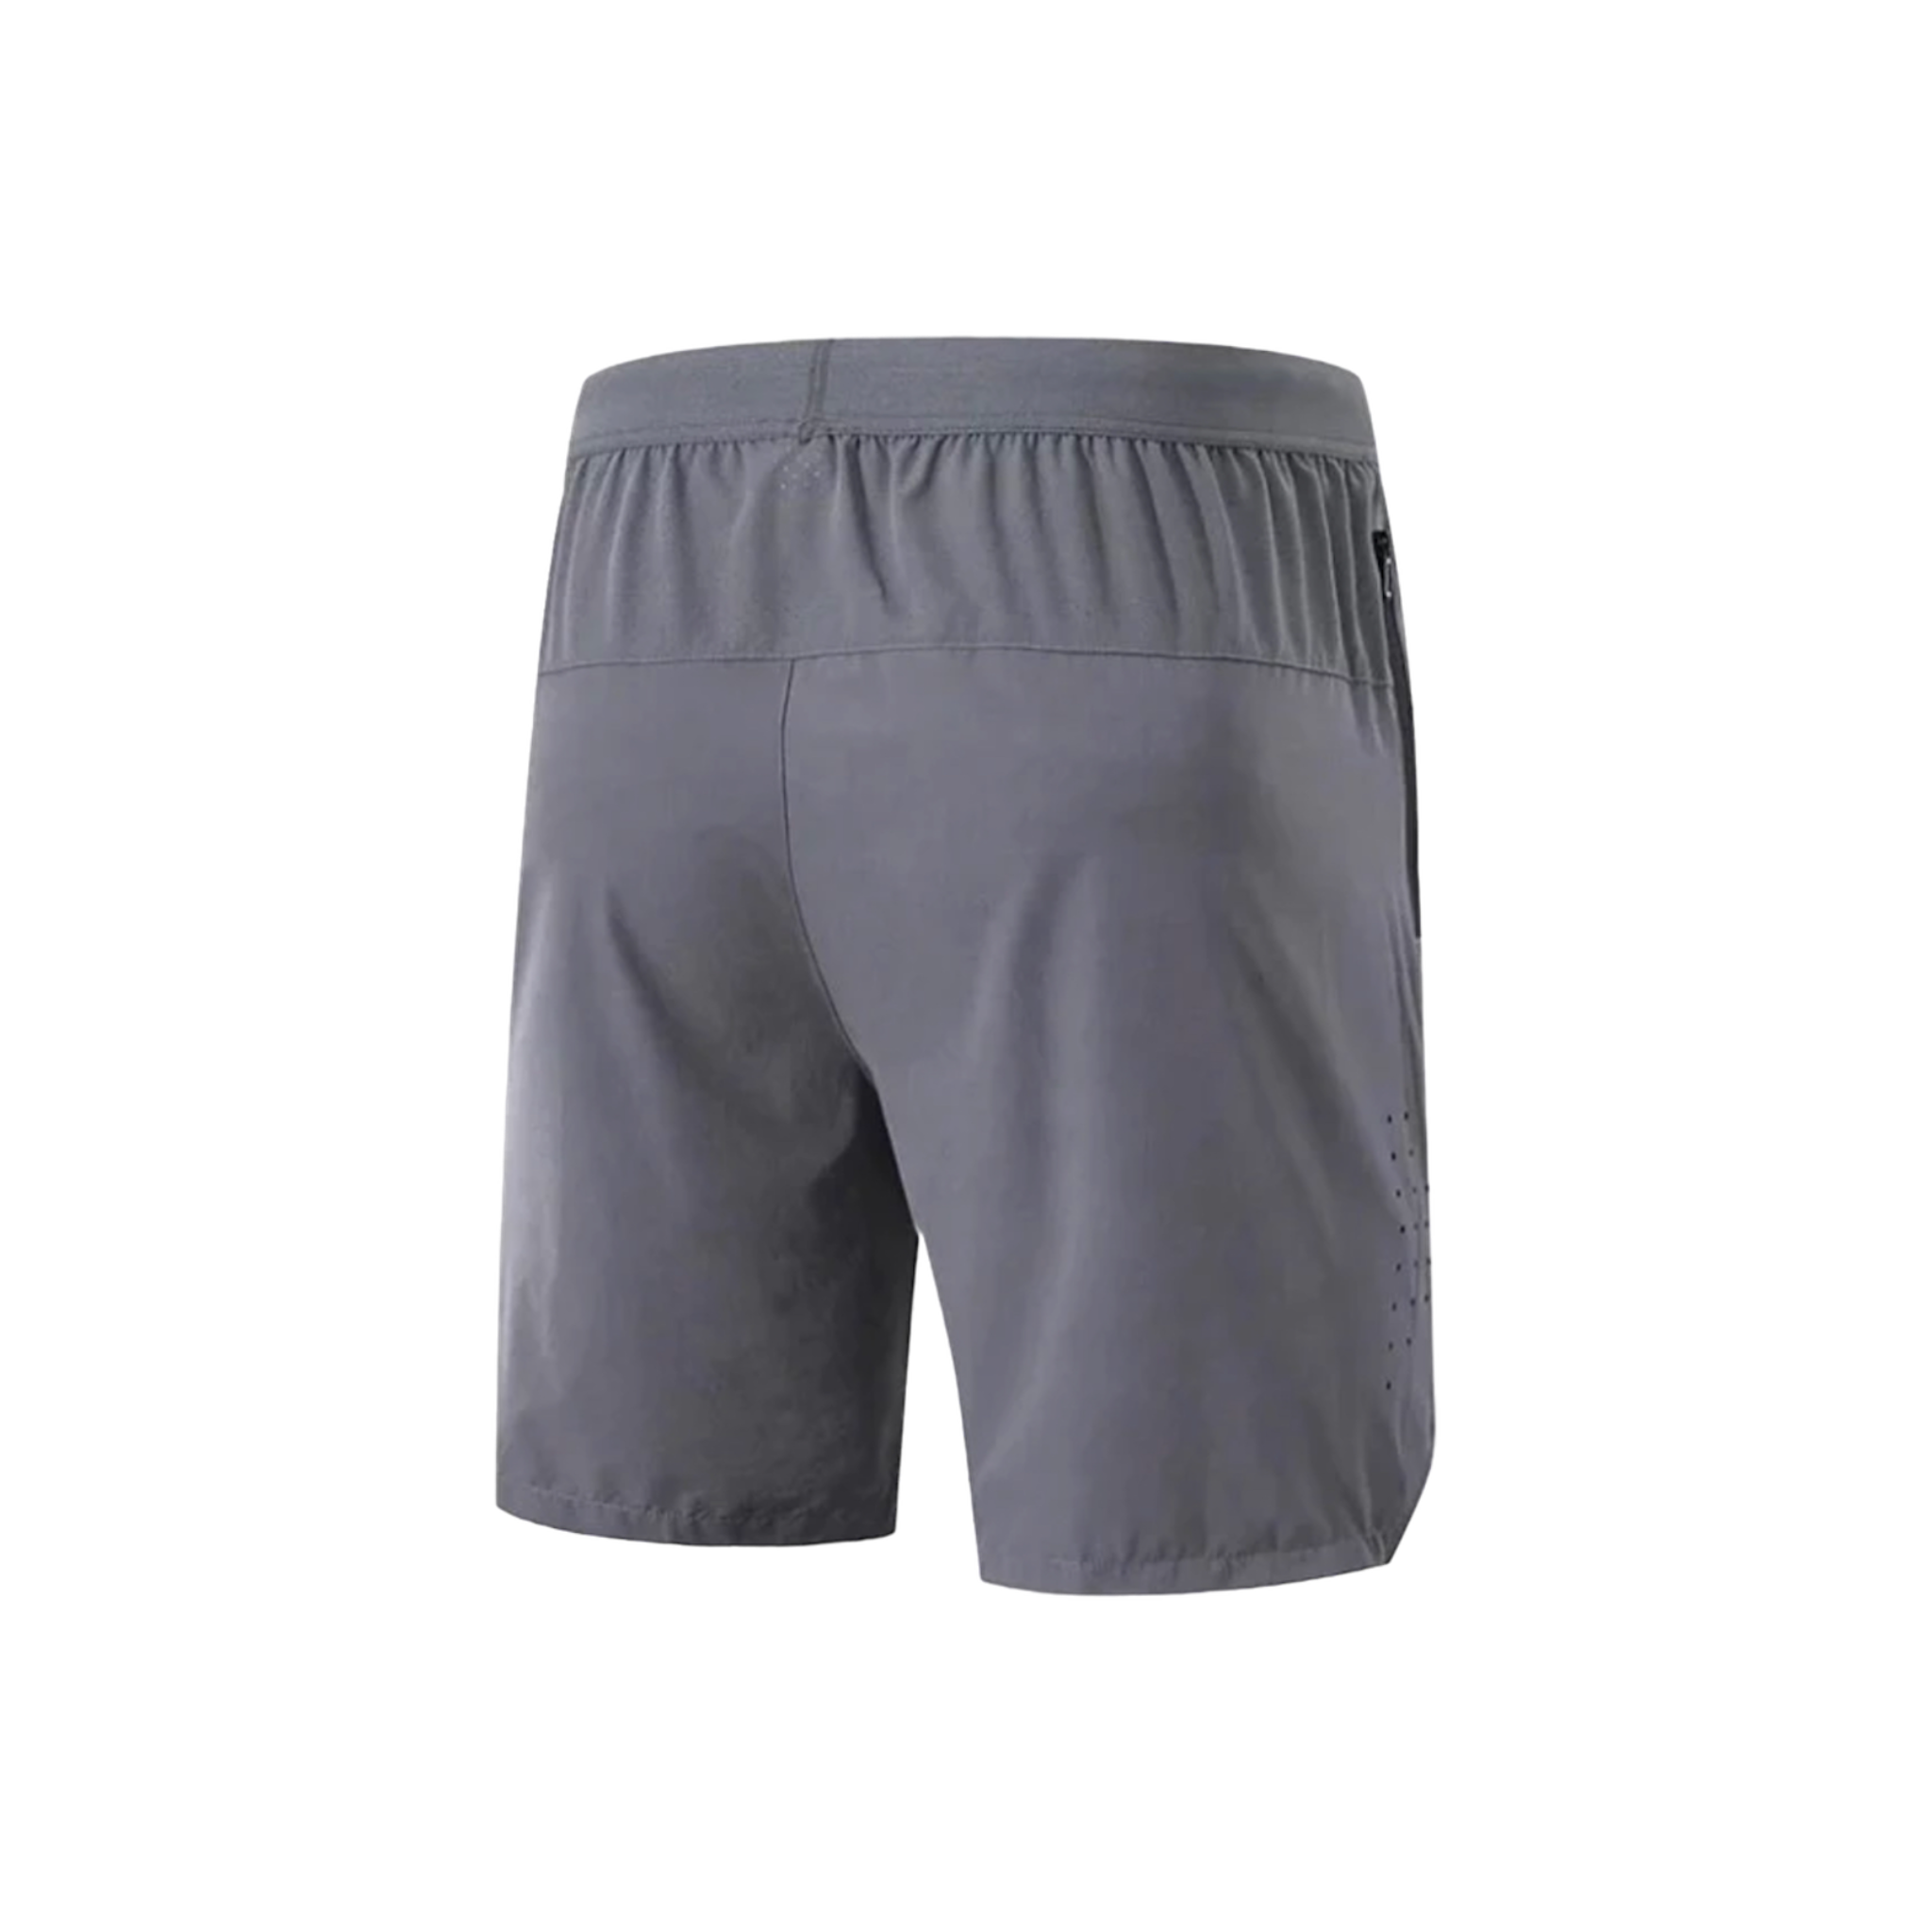 Draft Shorts pockets